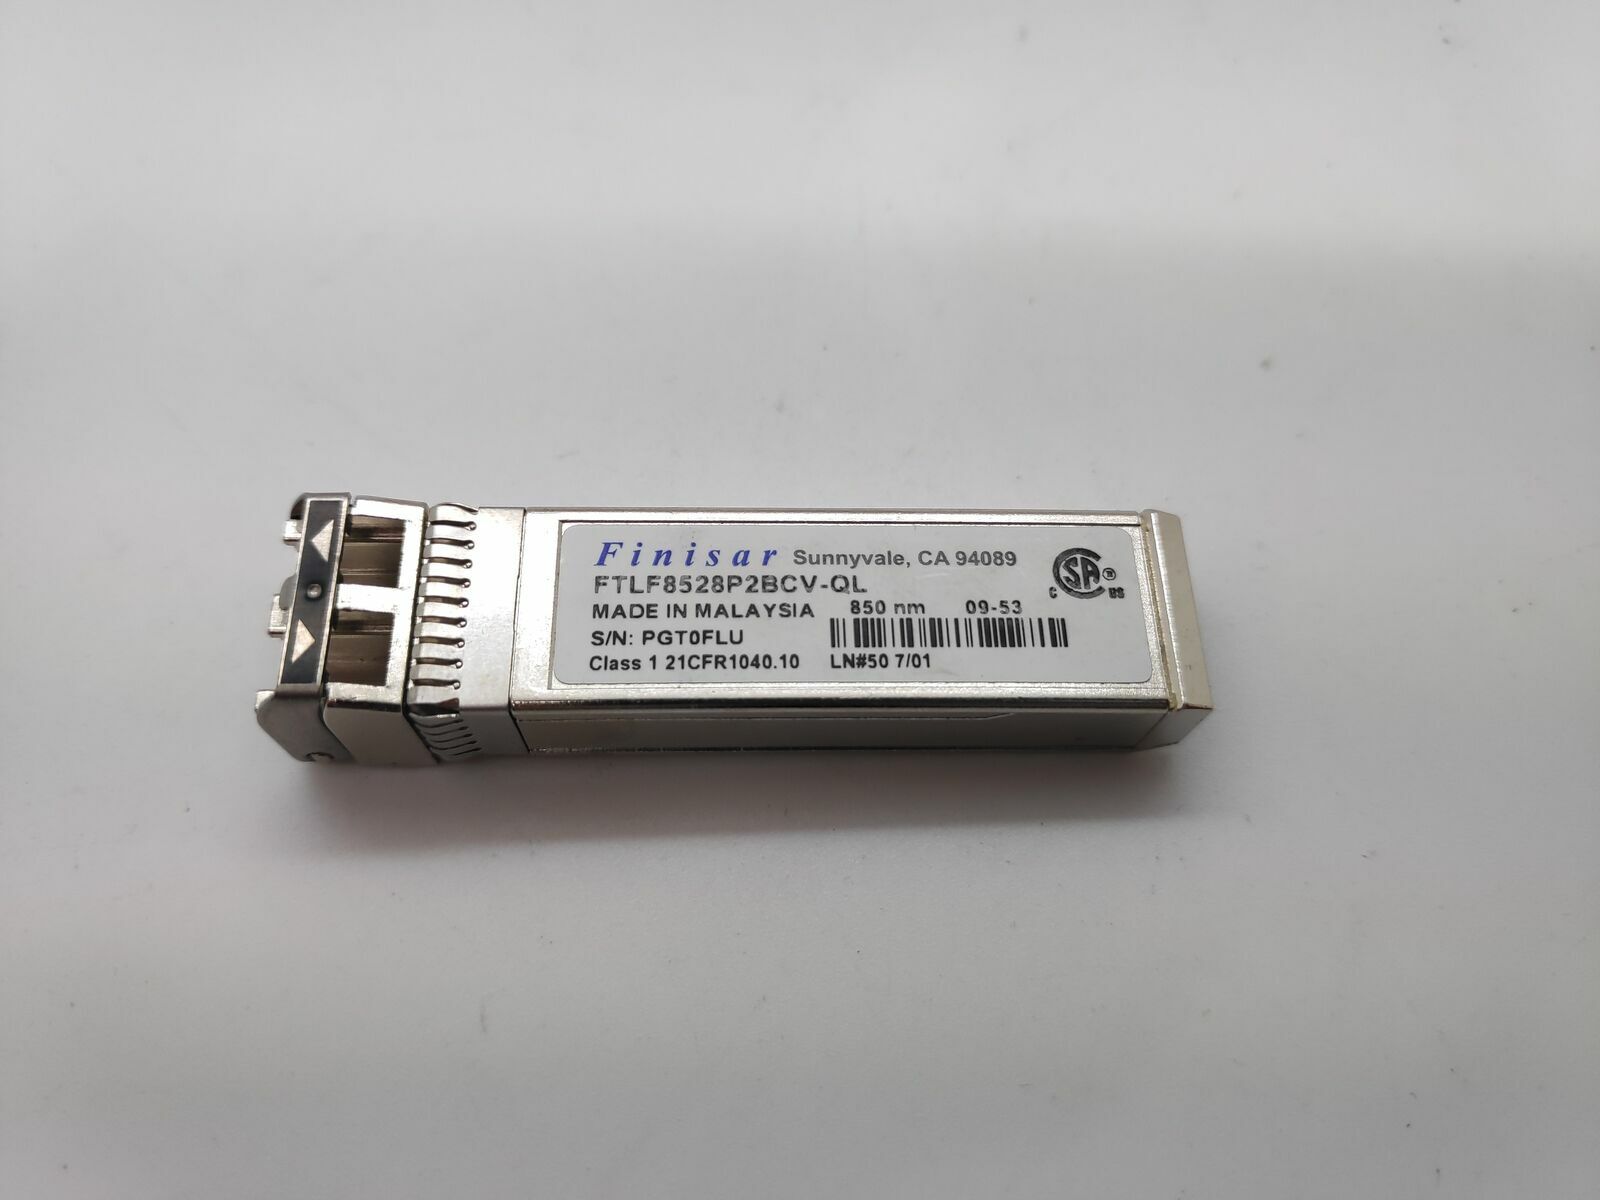 Finisar 8GB 850nm Fiber Channel FC SFP+Optical Transceiver FTLF8528P2BCV-QL